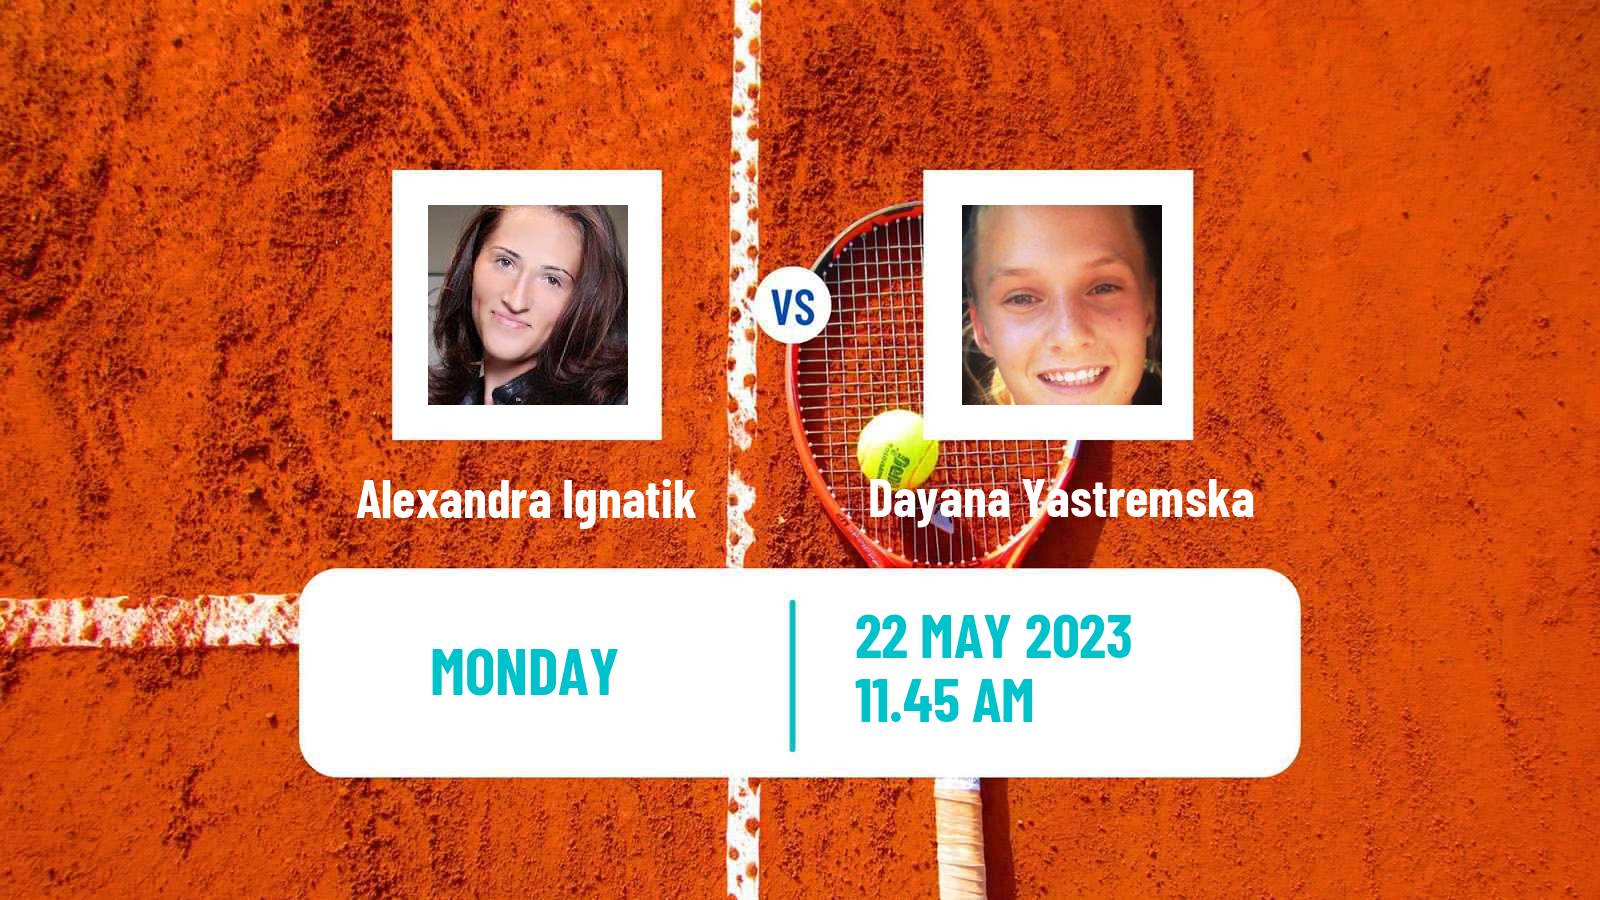 Tennis WTA Roland Garros Alexandra Ignatik - Dayana Yastremska